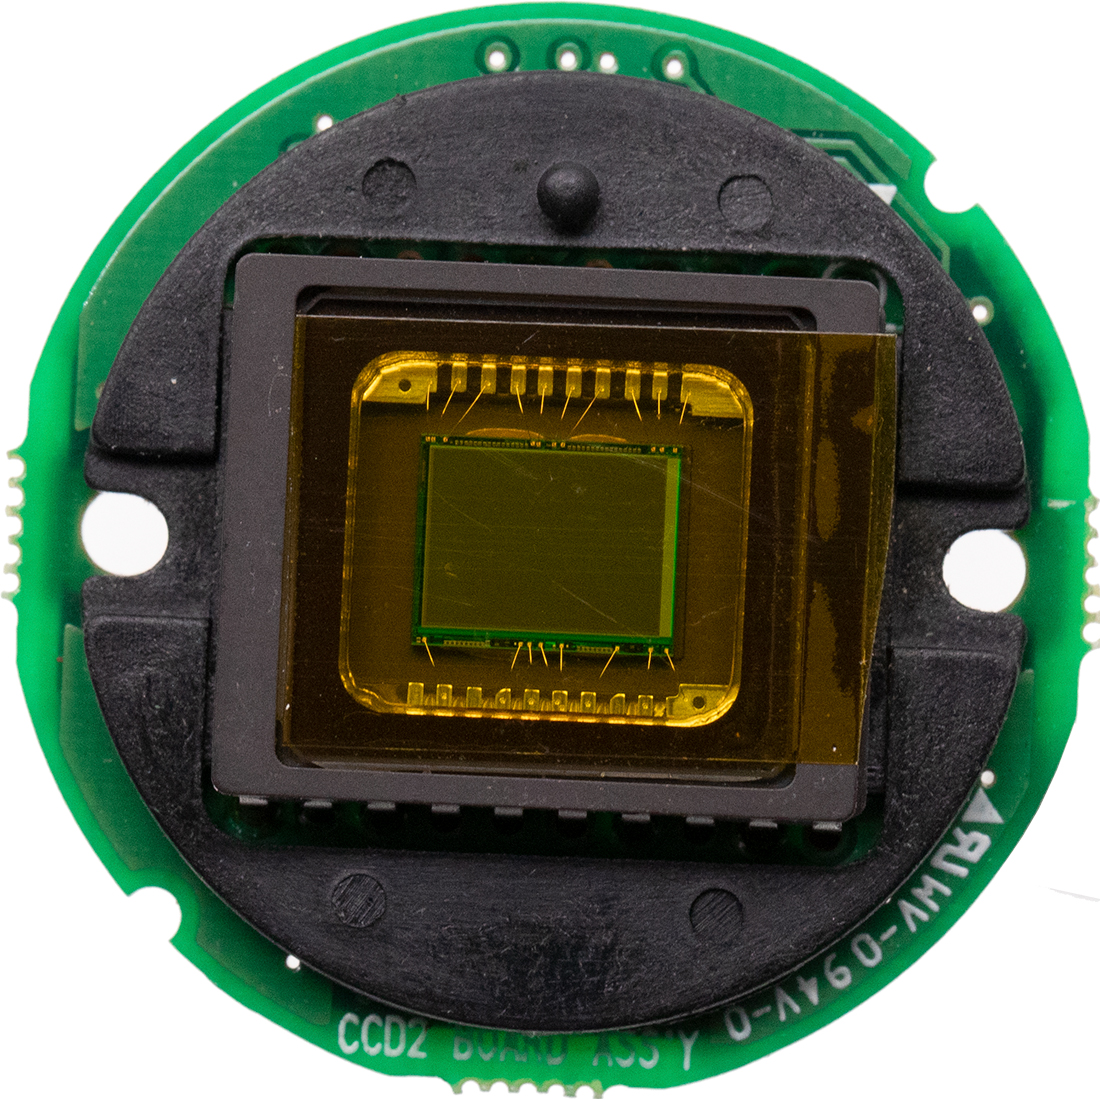 ICX429AKA 0.5inch CCD,索尼SONY 二分之一 CCD,模拟安防监控摄像机CCD SENSOR,大靶面彩色图像传感器模组,大尺寸CCD ,SONY CCD代理商